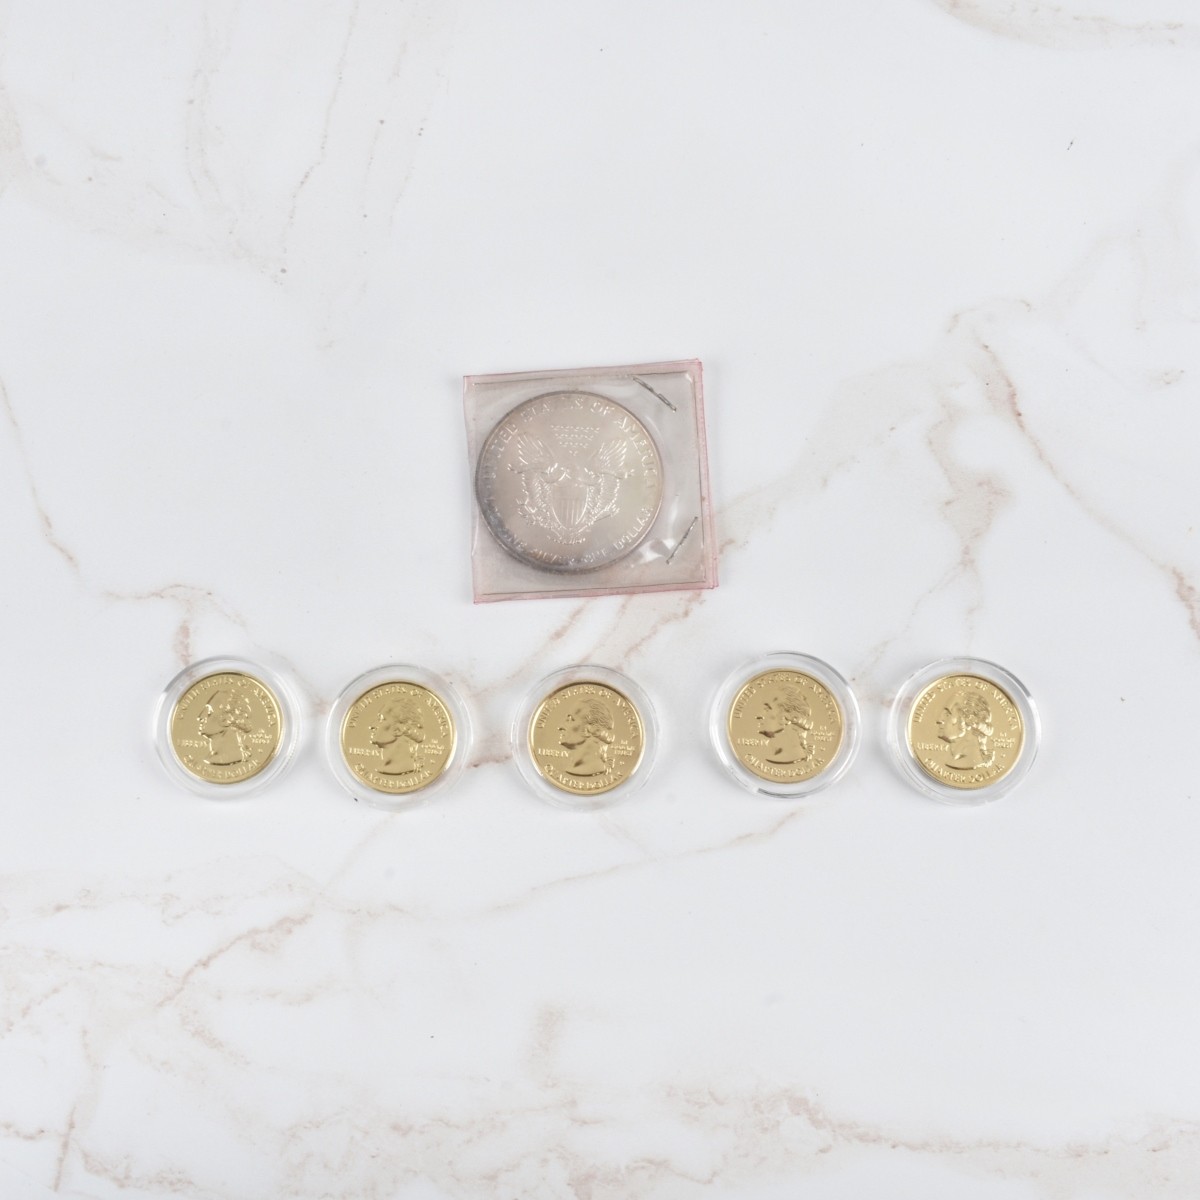 The Washington Mint Coin Set